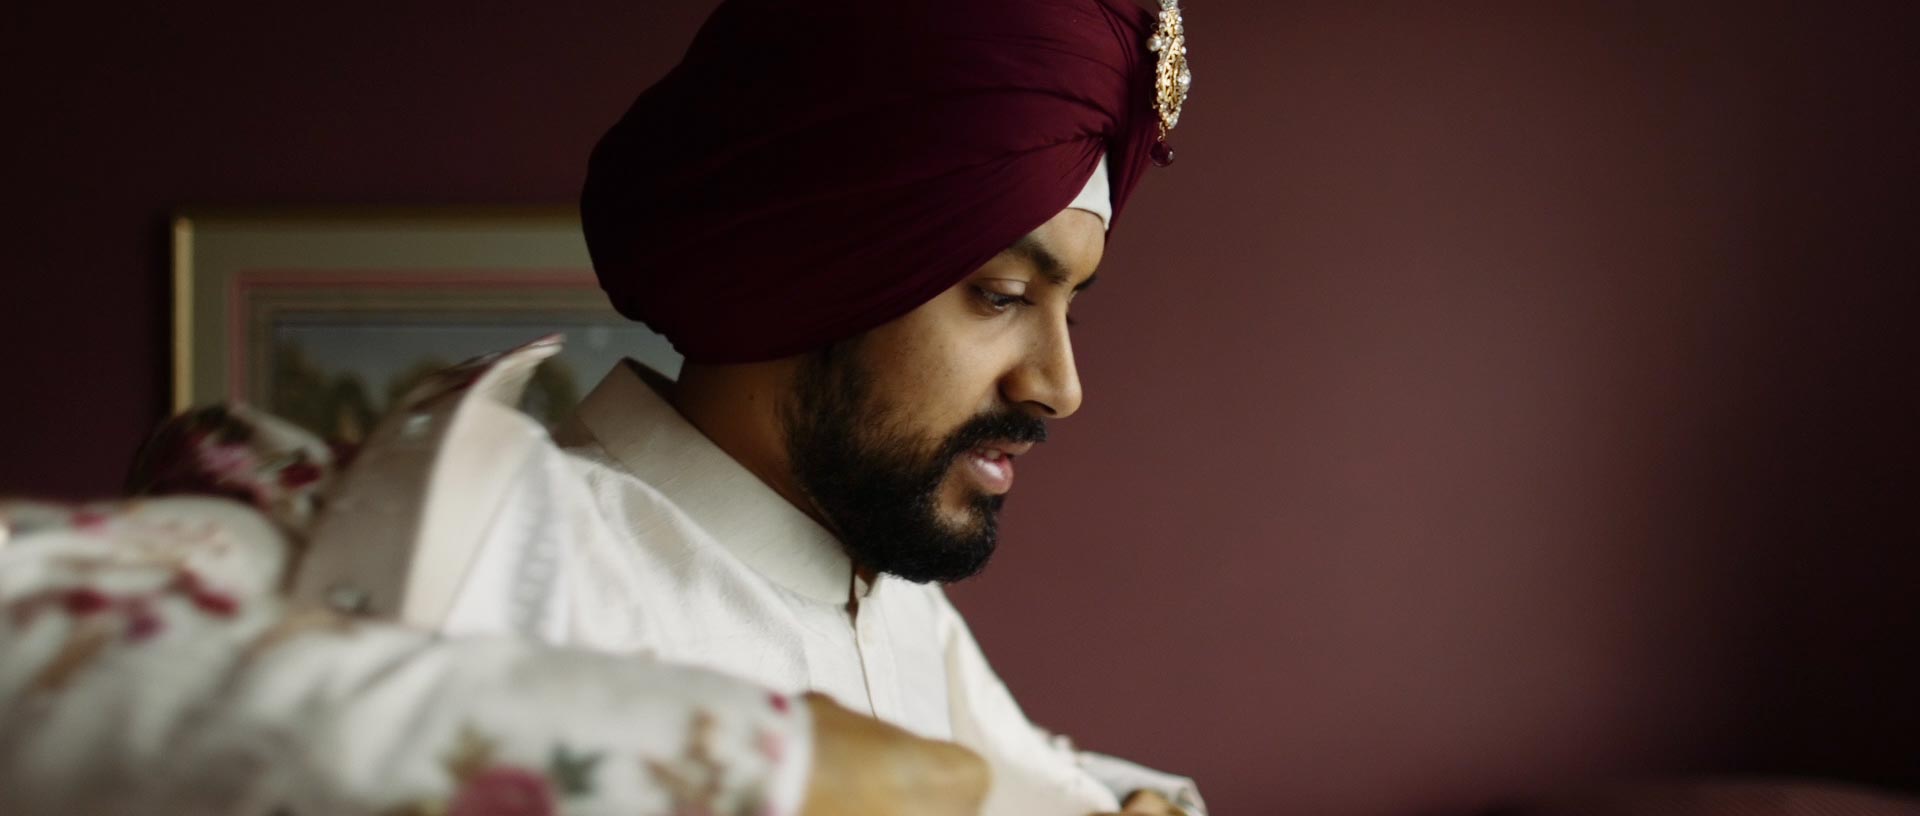 Sikh Groom Gets Ready on Wedding Day